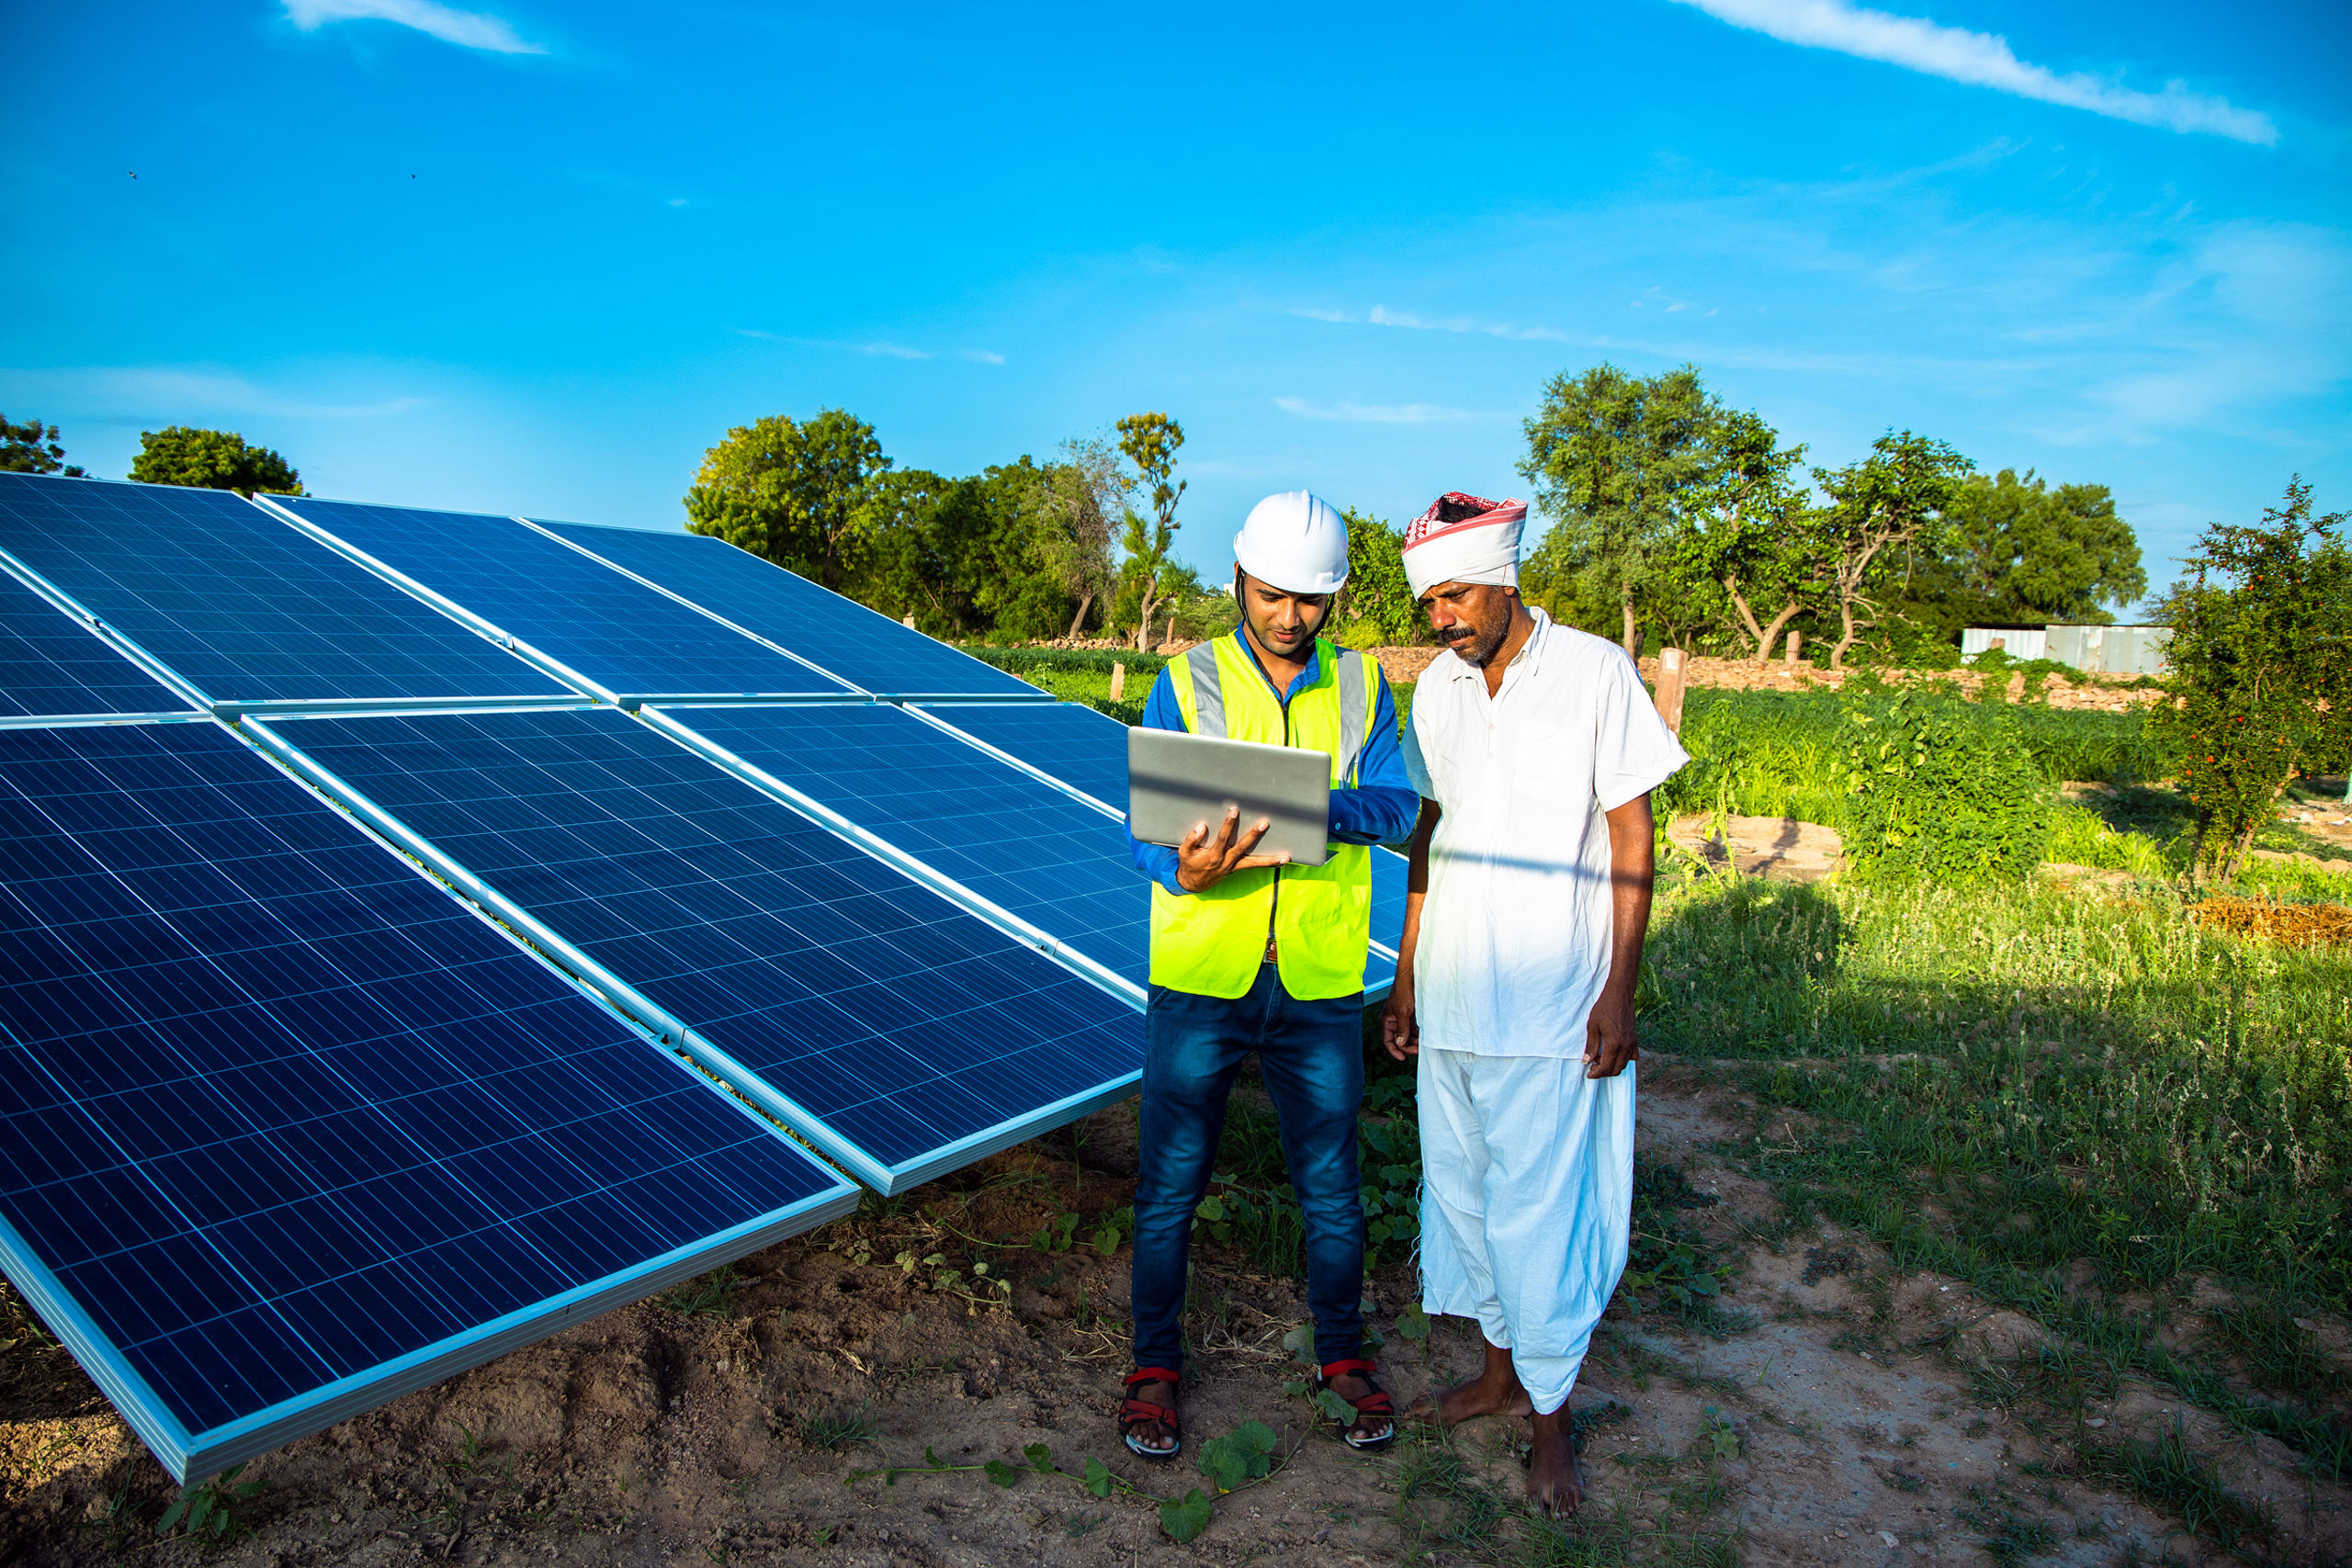 Installation of solar panels in India